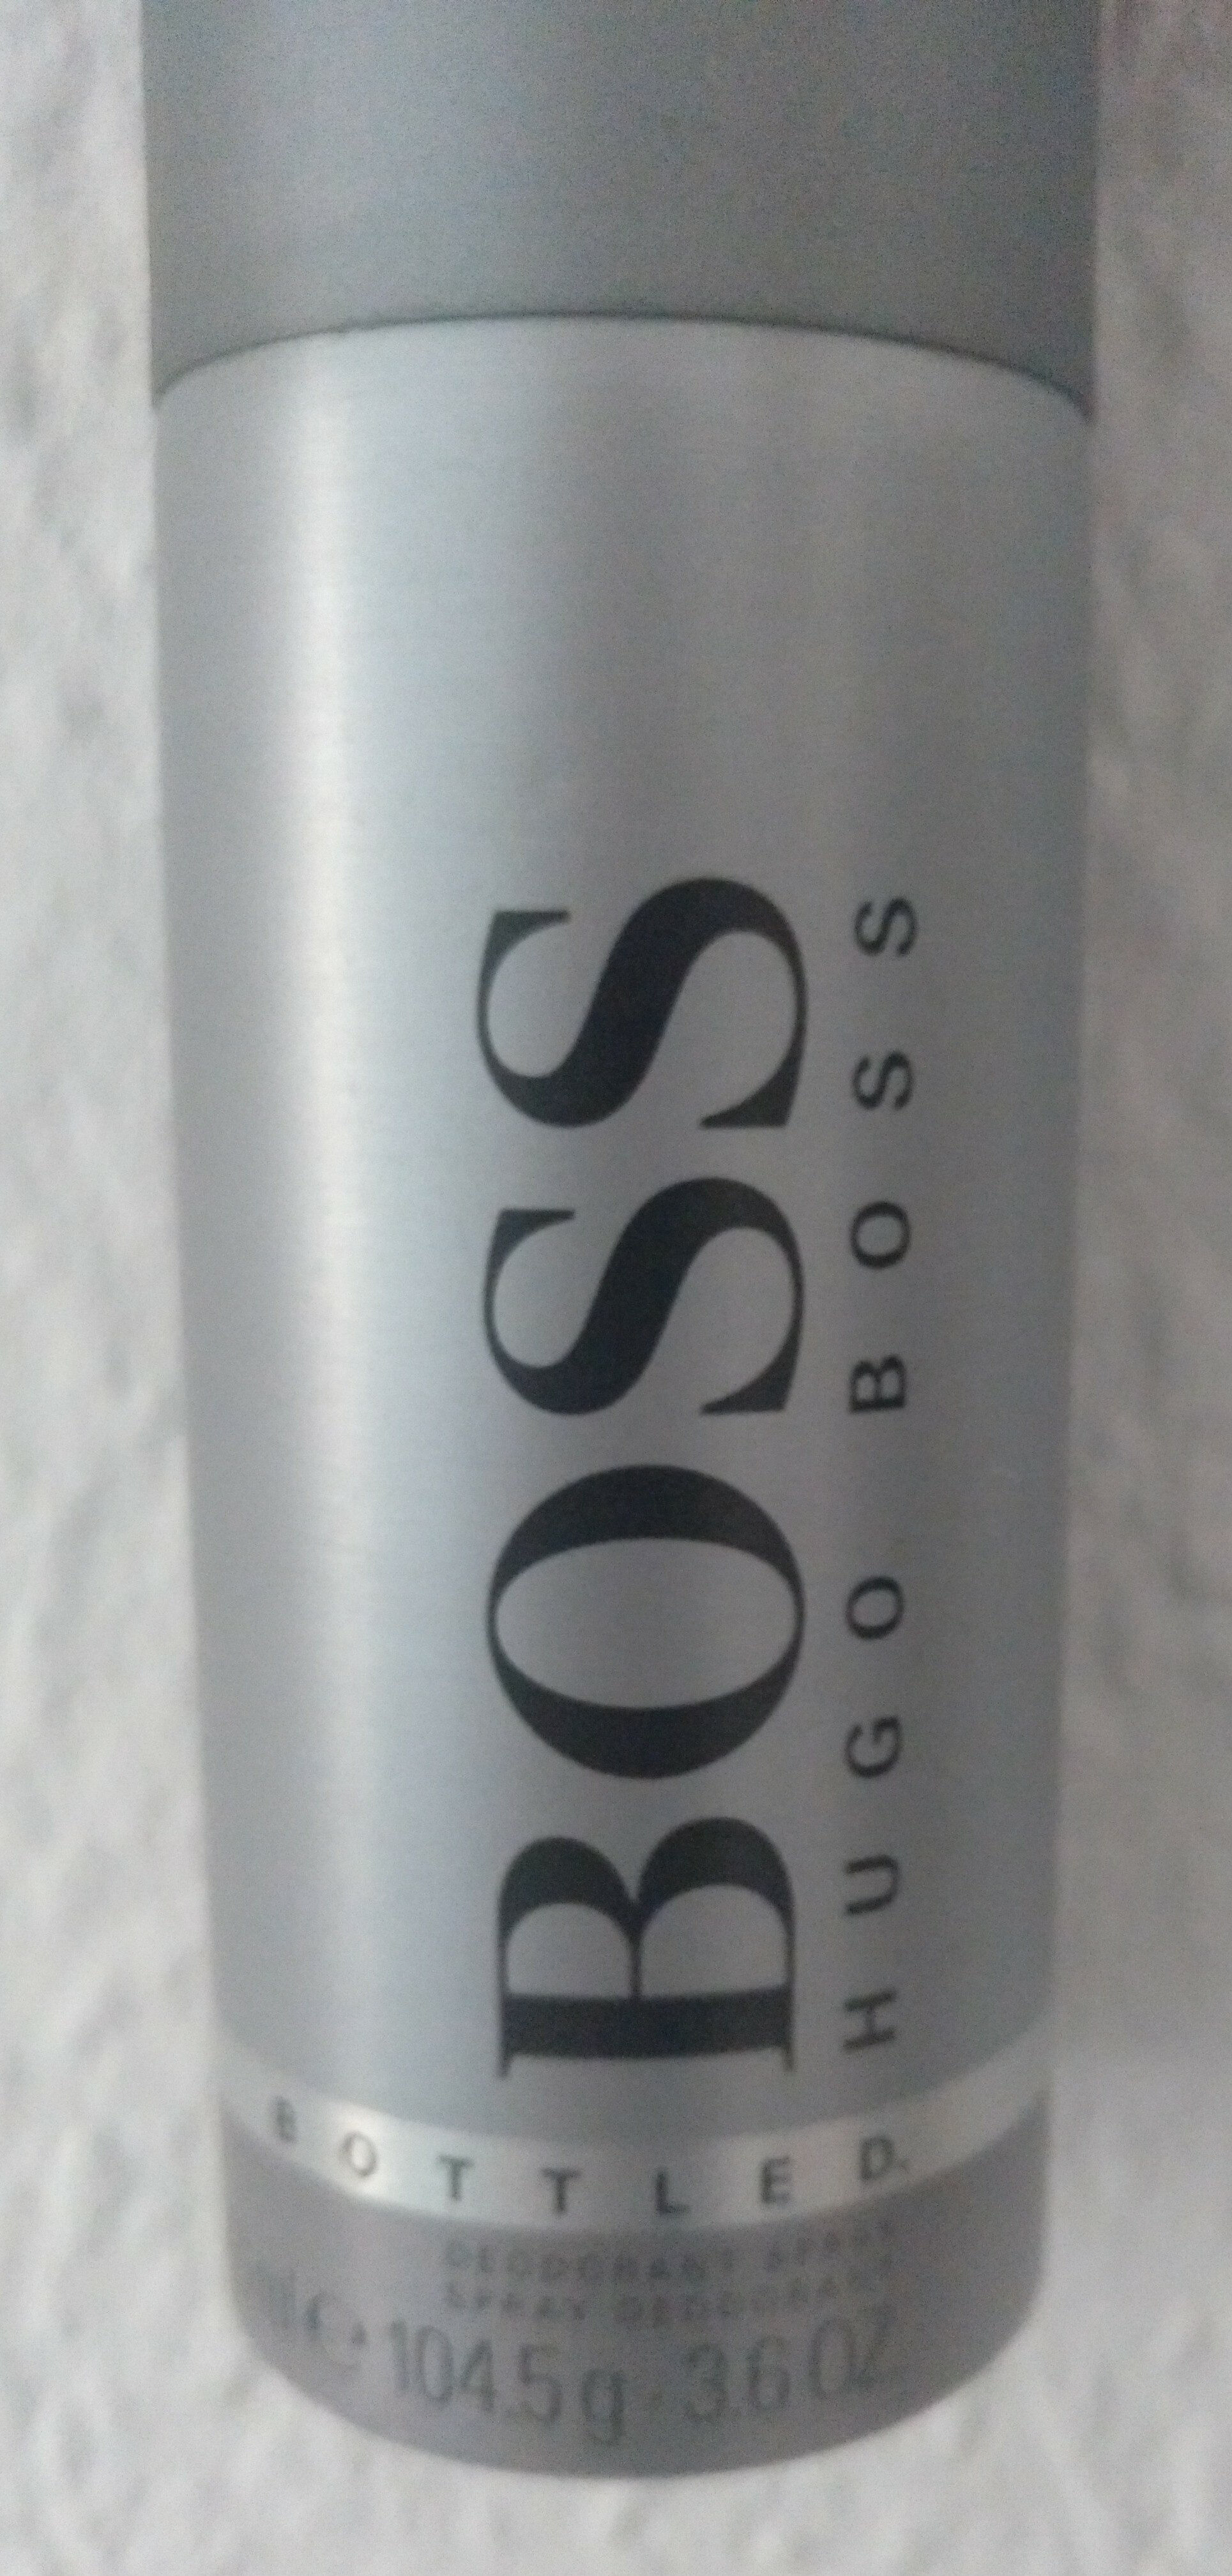 Hugo Boss Botteled Deodorant - Tuote - de